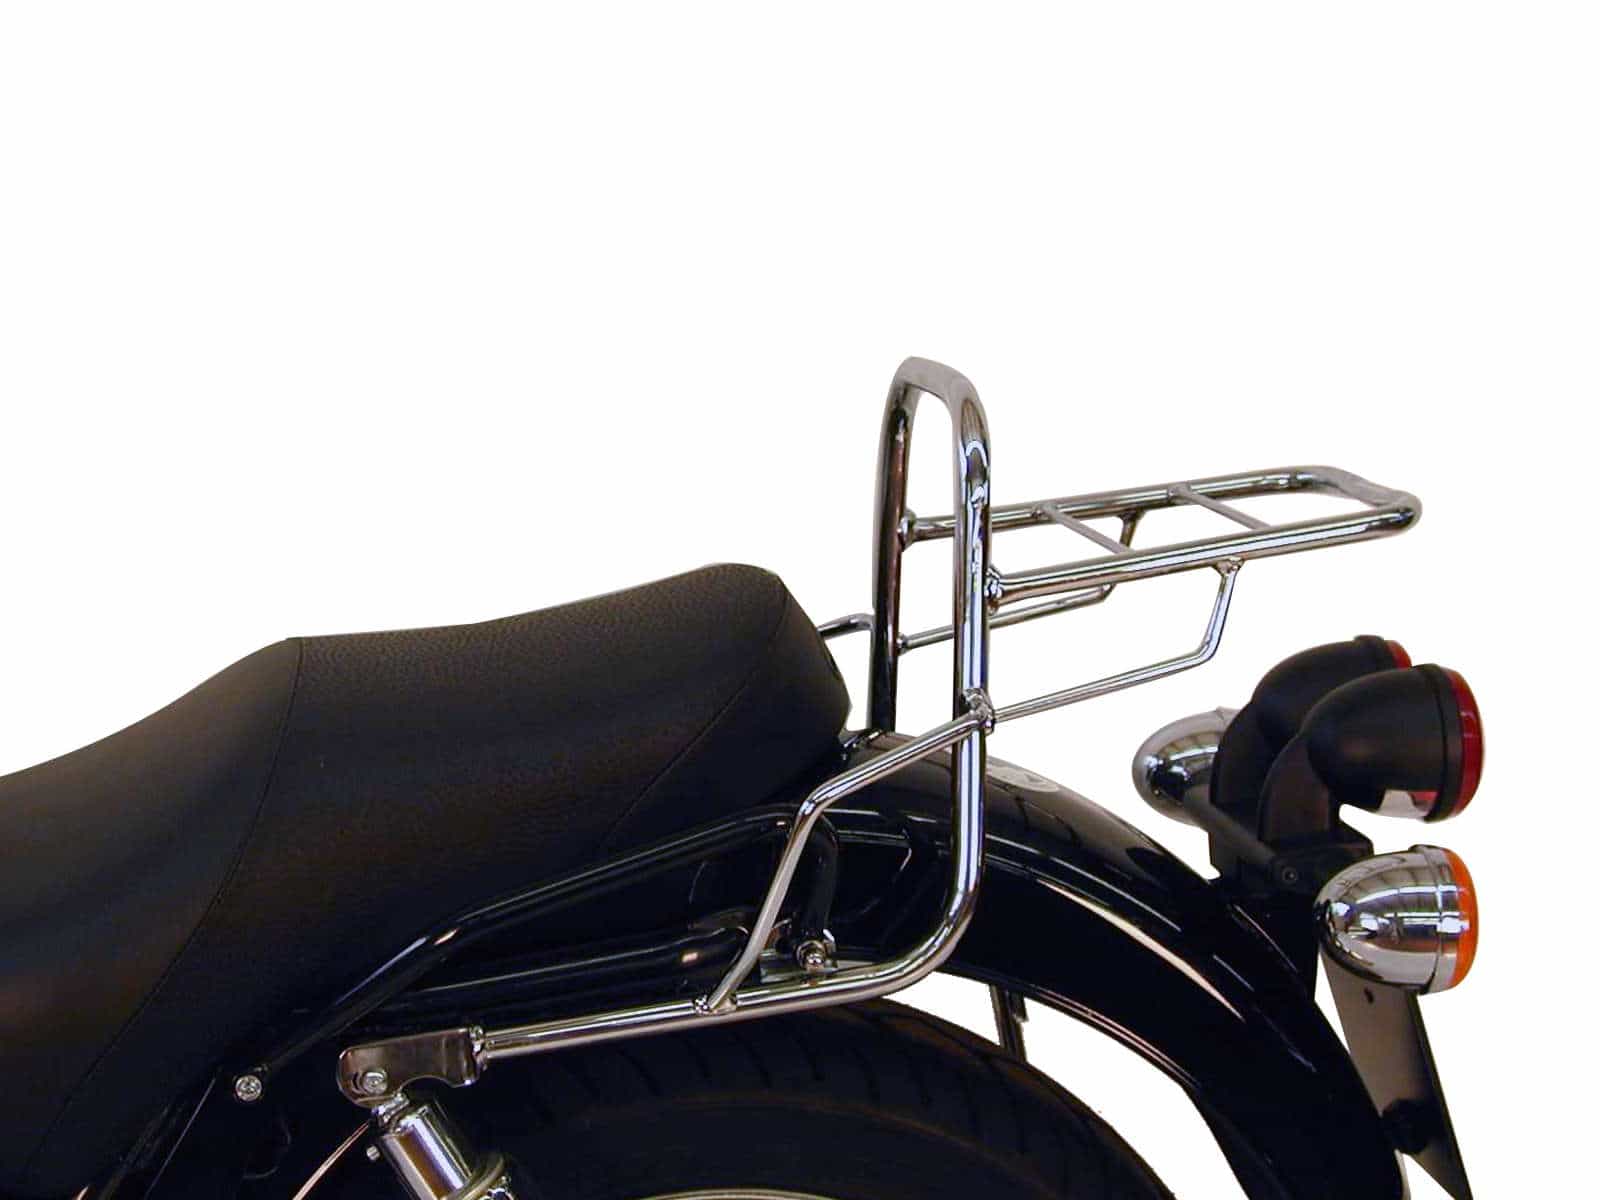 Topcase carrier tube-type chrome for Moto Guzzi California Metal (2001-2003)